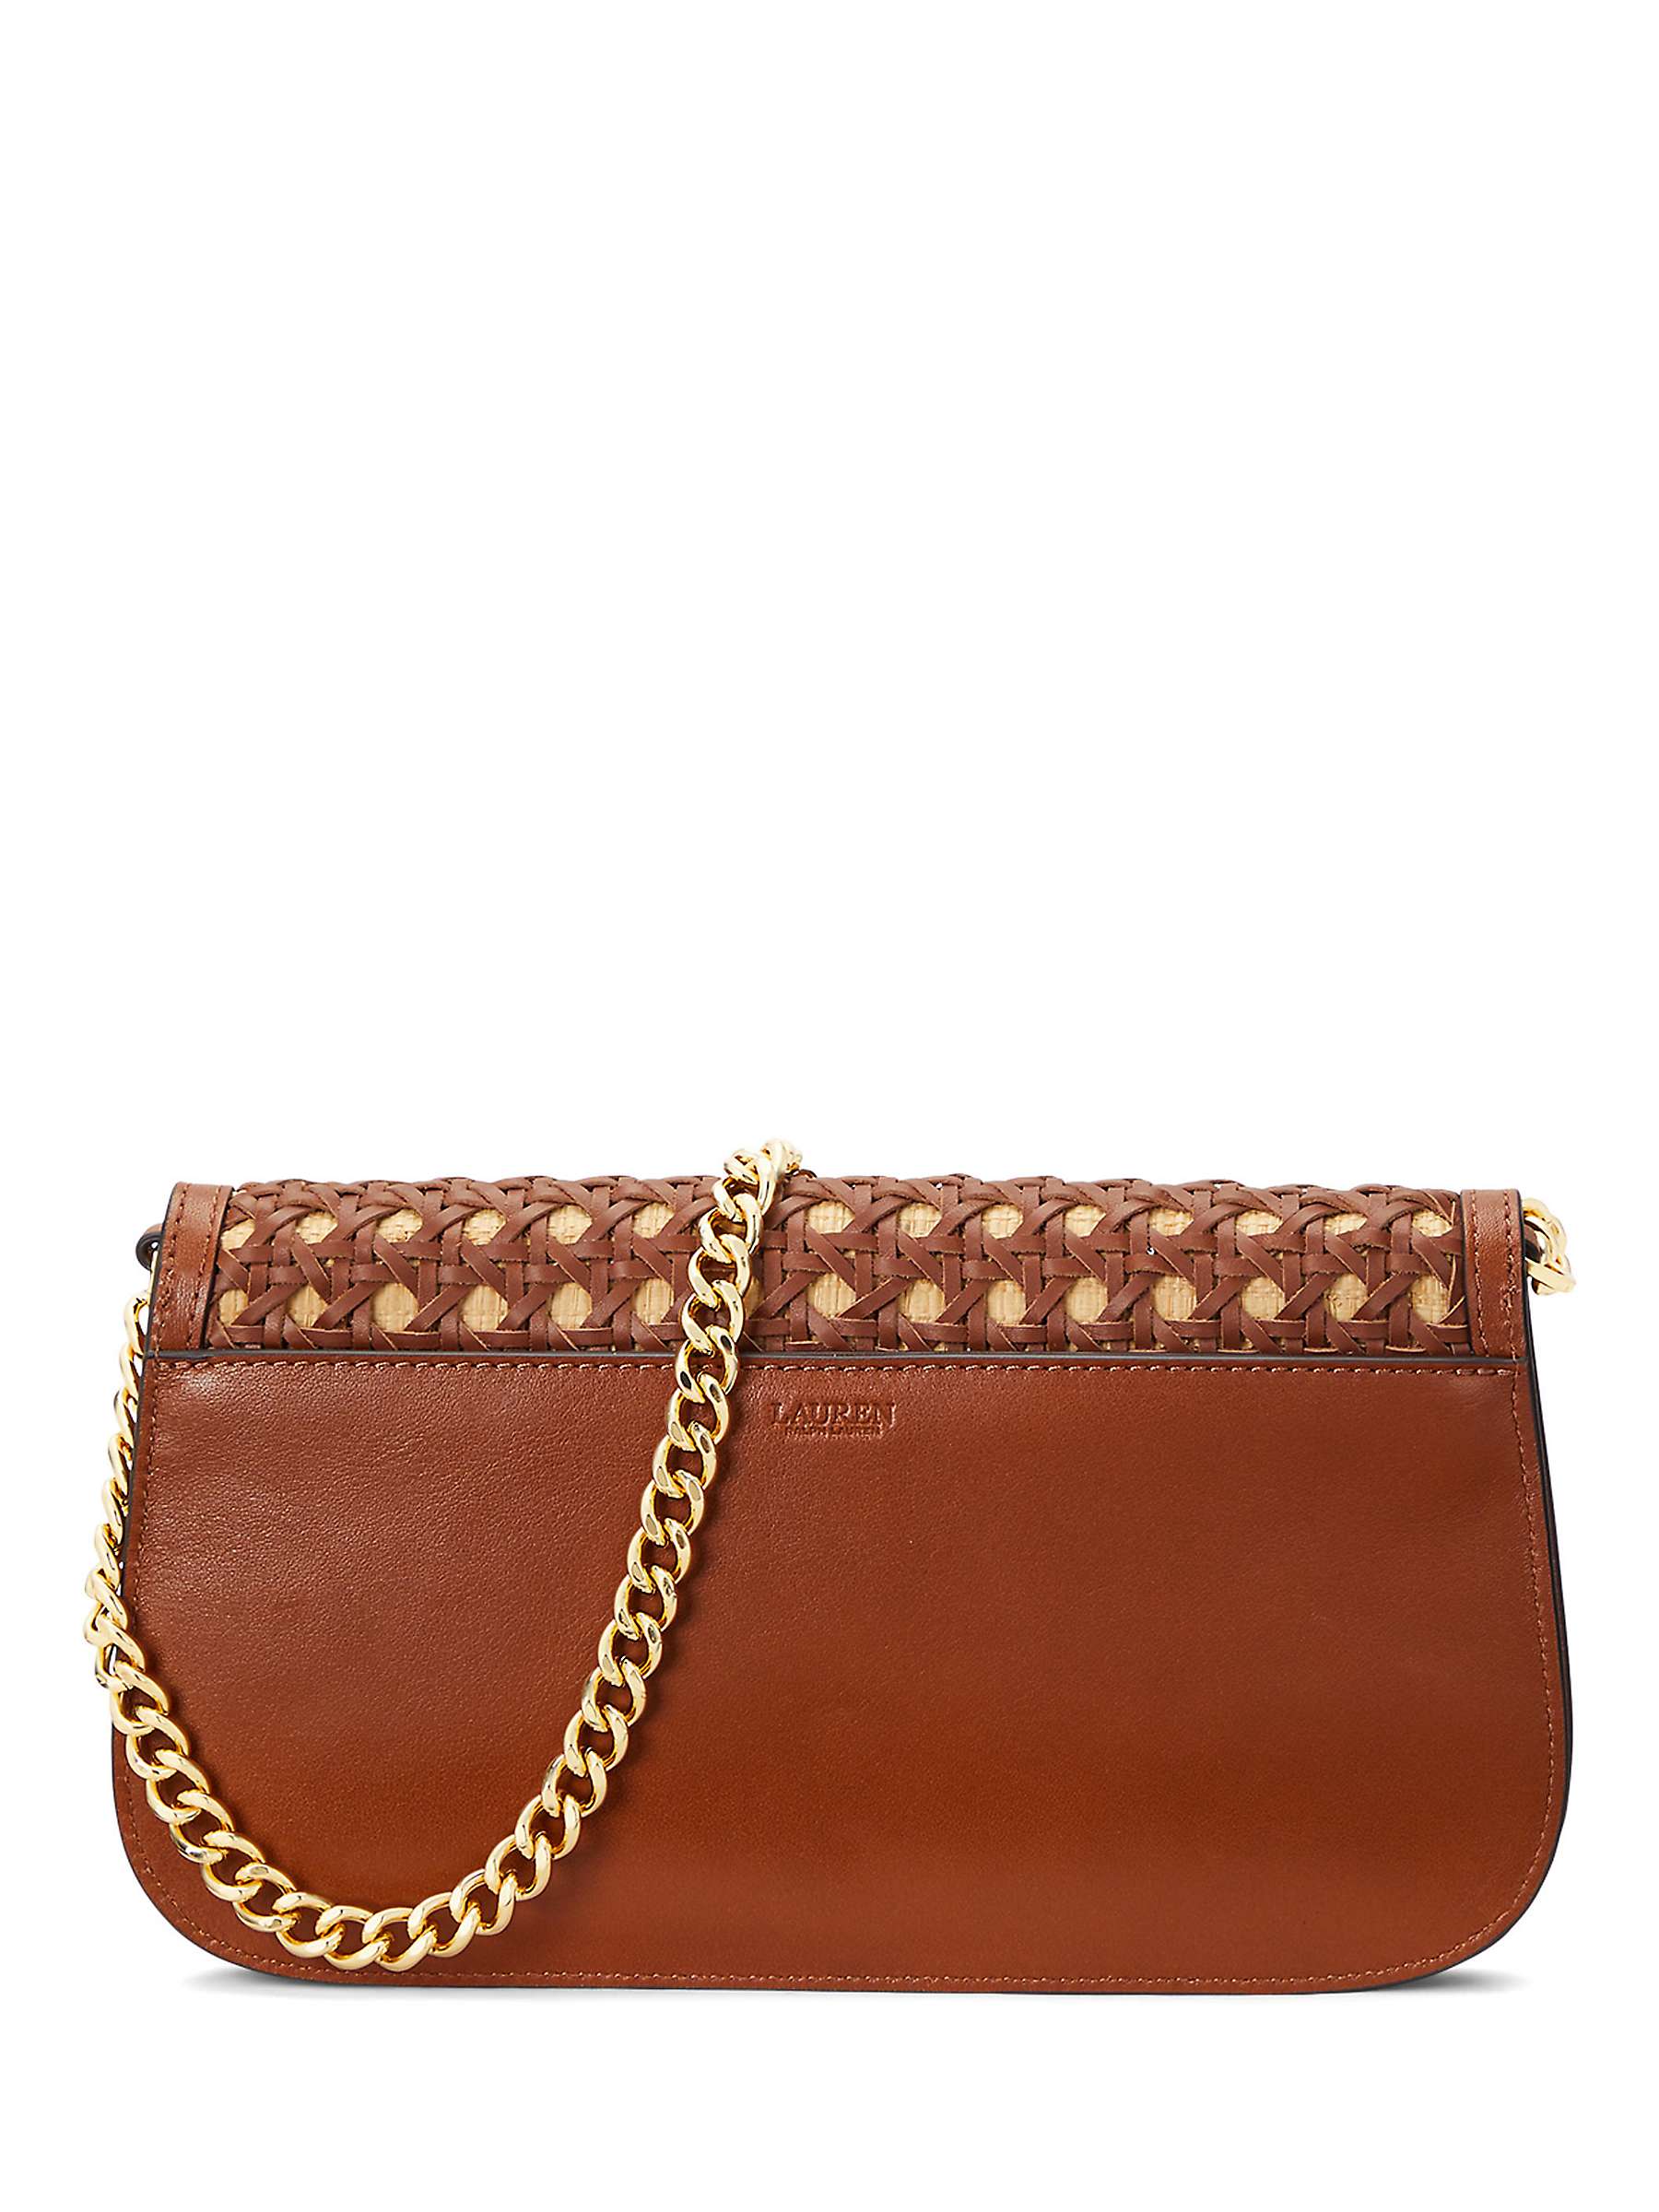 Buy Lauren Ralph Lauren Tanner Raffia Chain Strap Shoulder Bag Online at johnlewis.com